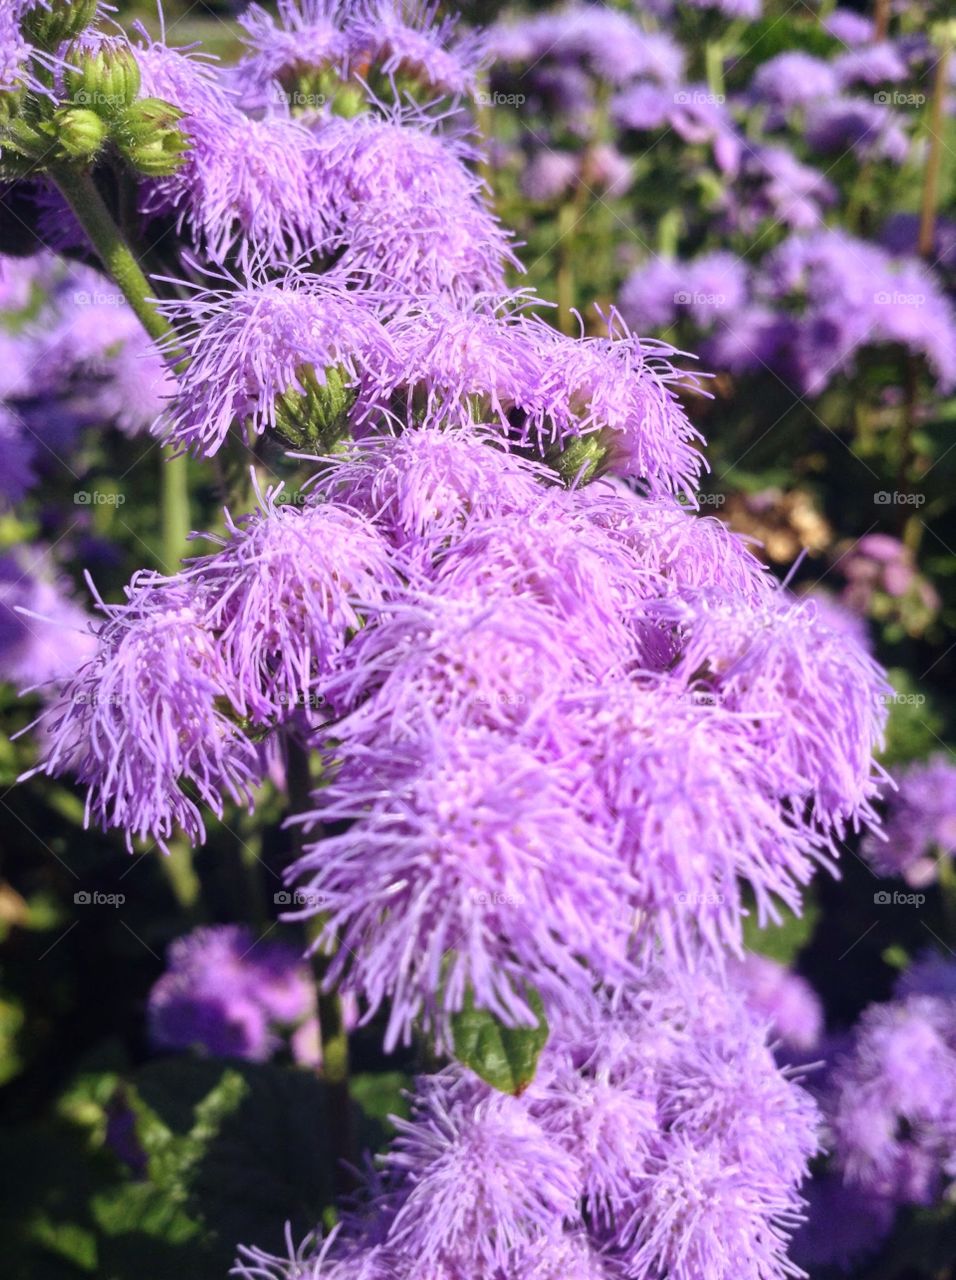 Lavender flow. An interesting flowers at the botanical garden.